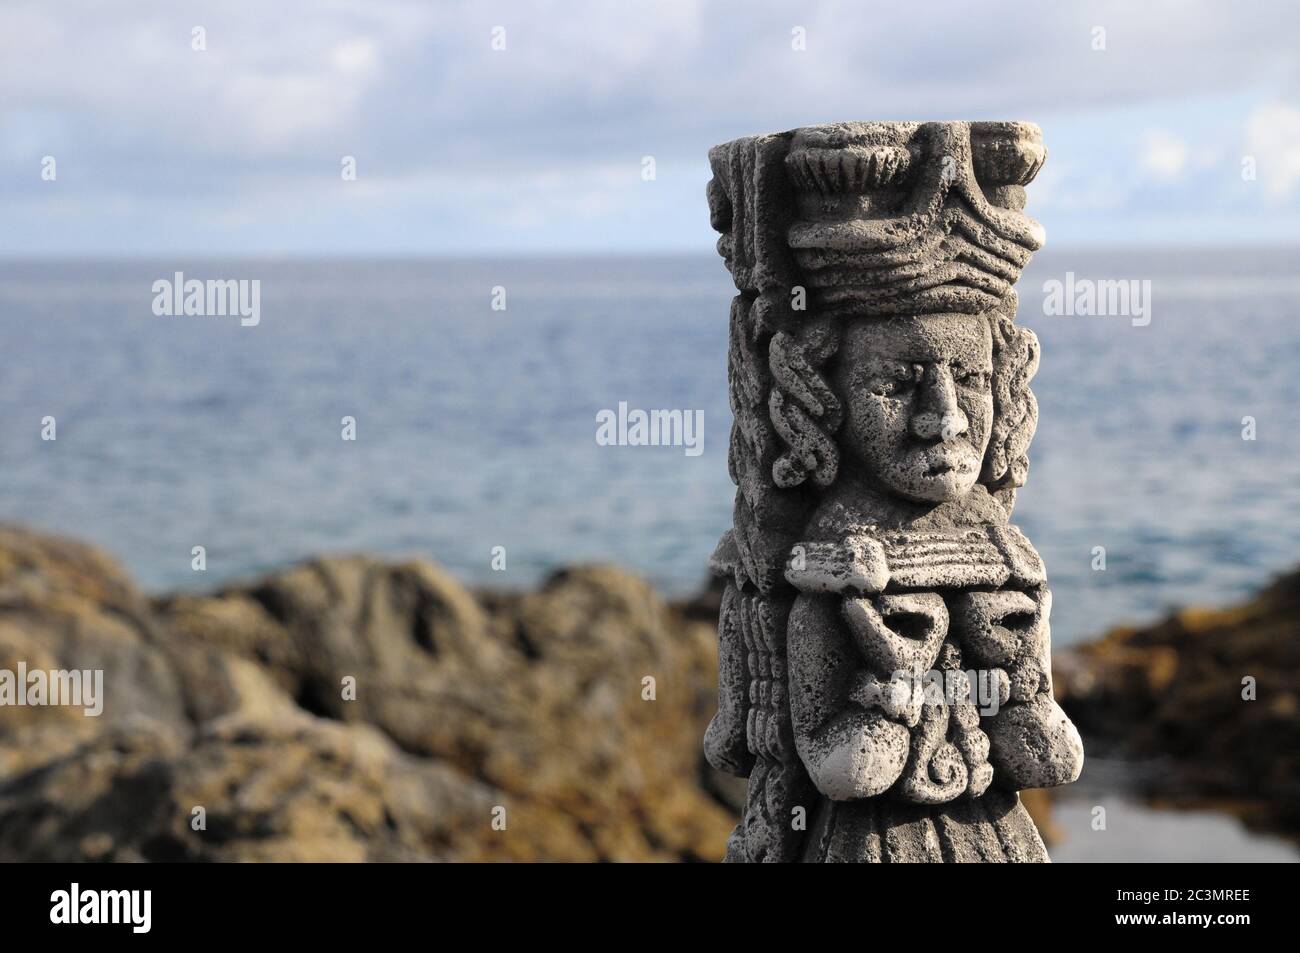 Ancient Maya Statue on the Rocks near the Ocean Stock Photo